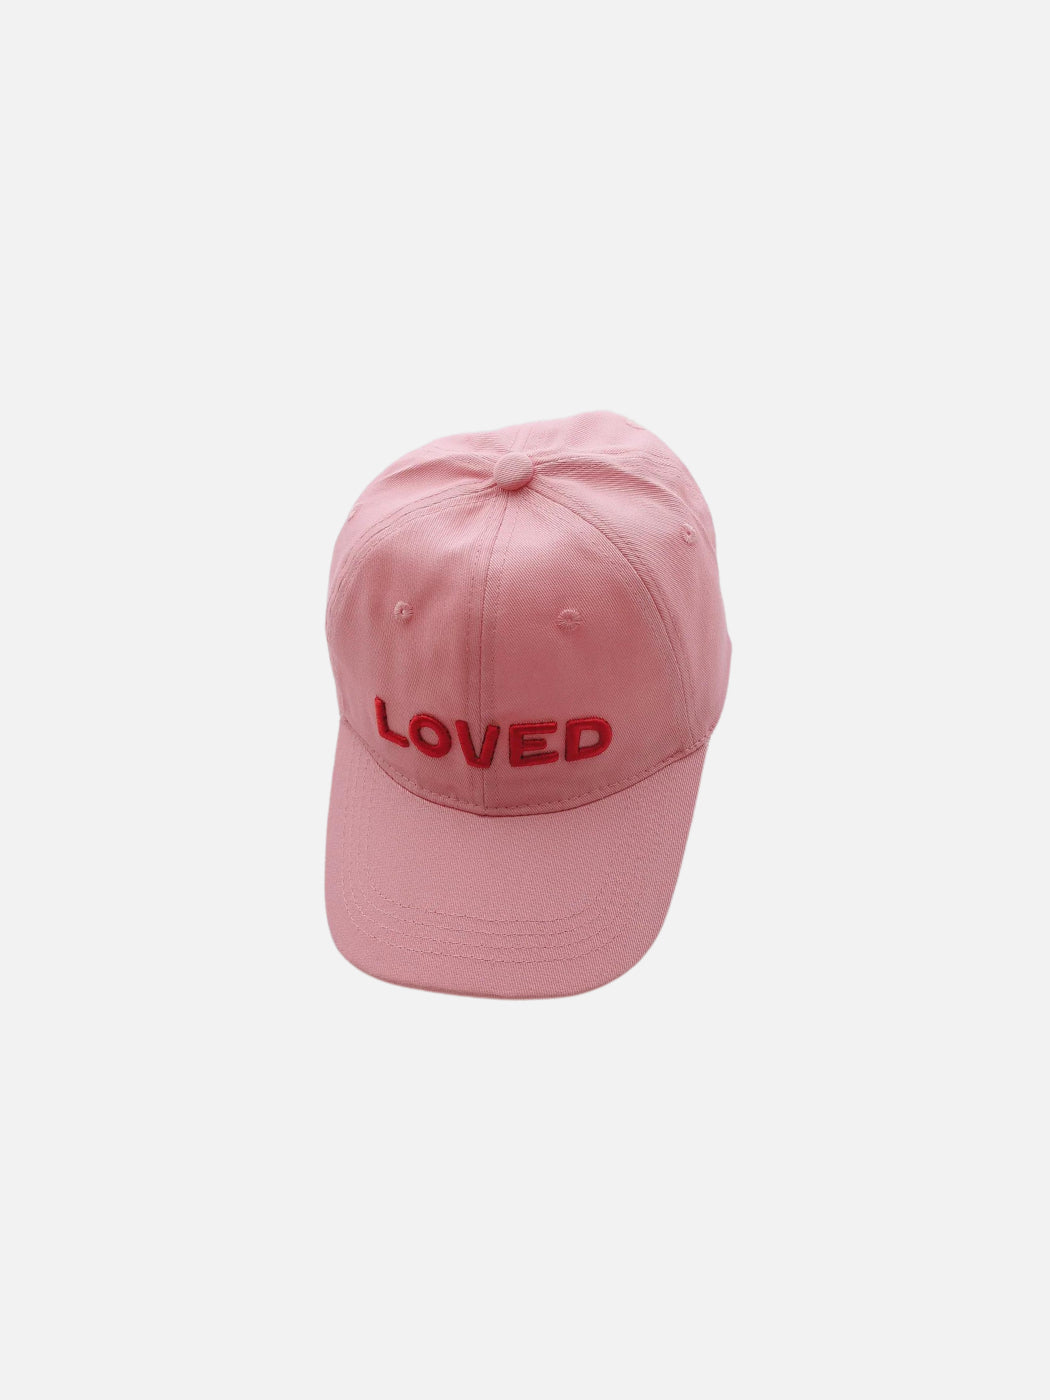 Loved Hat - Pink